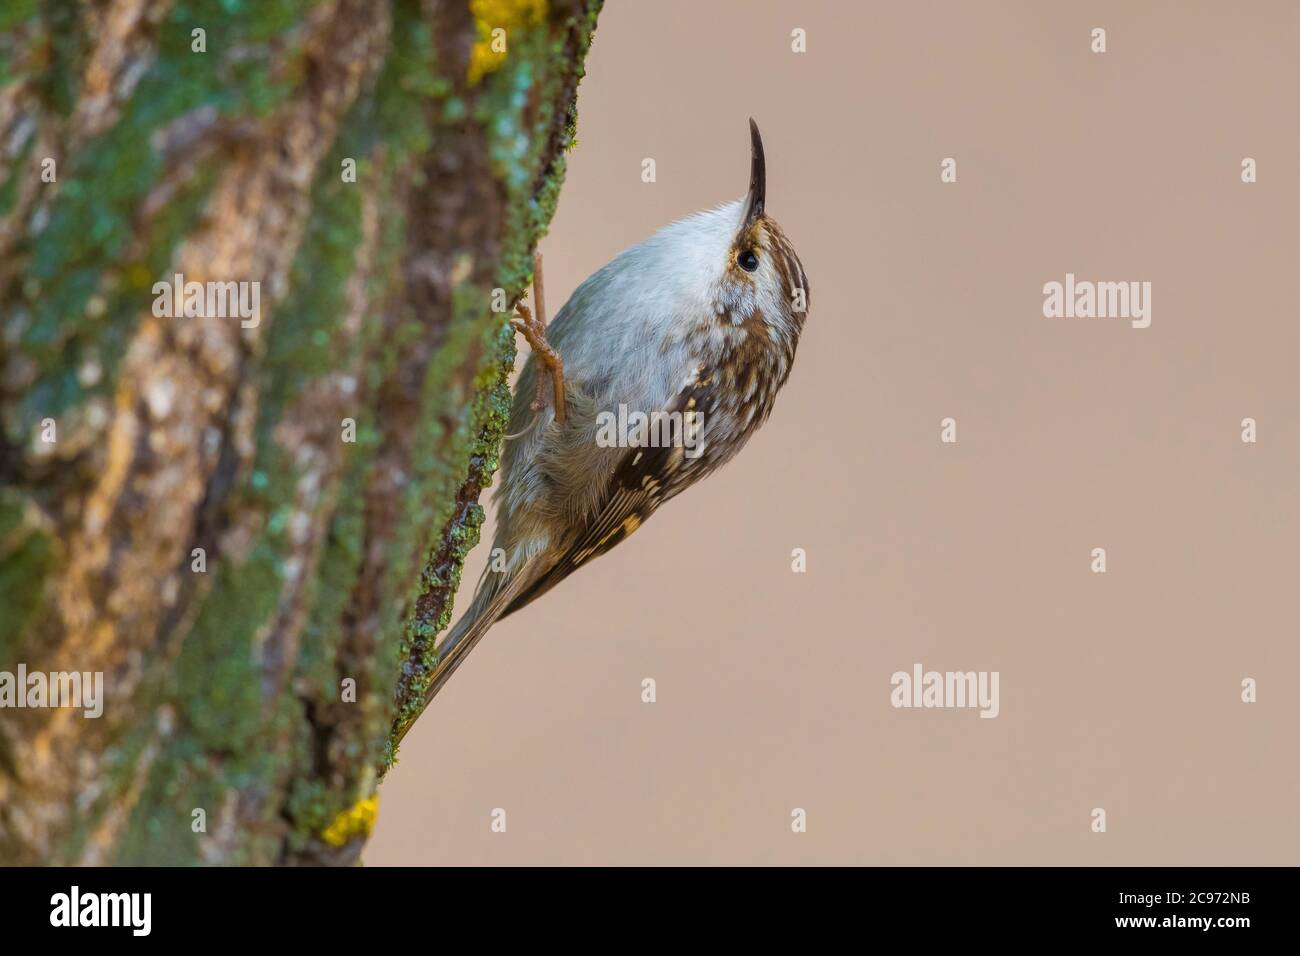 Treecreeper de puntera corta de África noroccidental (Certhia brachydactyla mauritanica, Certhia mauritanica), perchando en un tronco de árbol, vista lateral, Marruecos, Ifrane Foto de stock